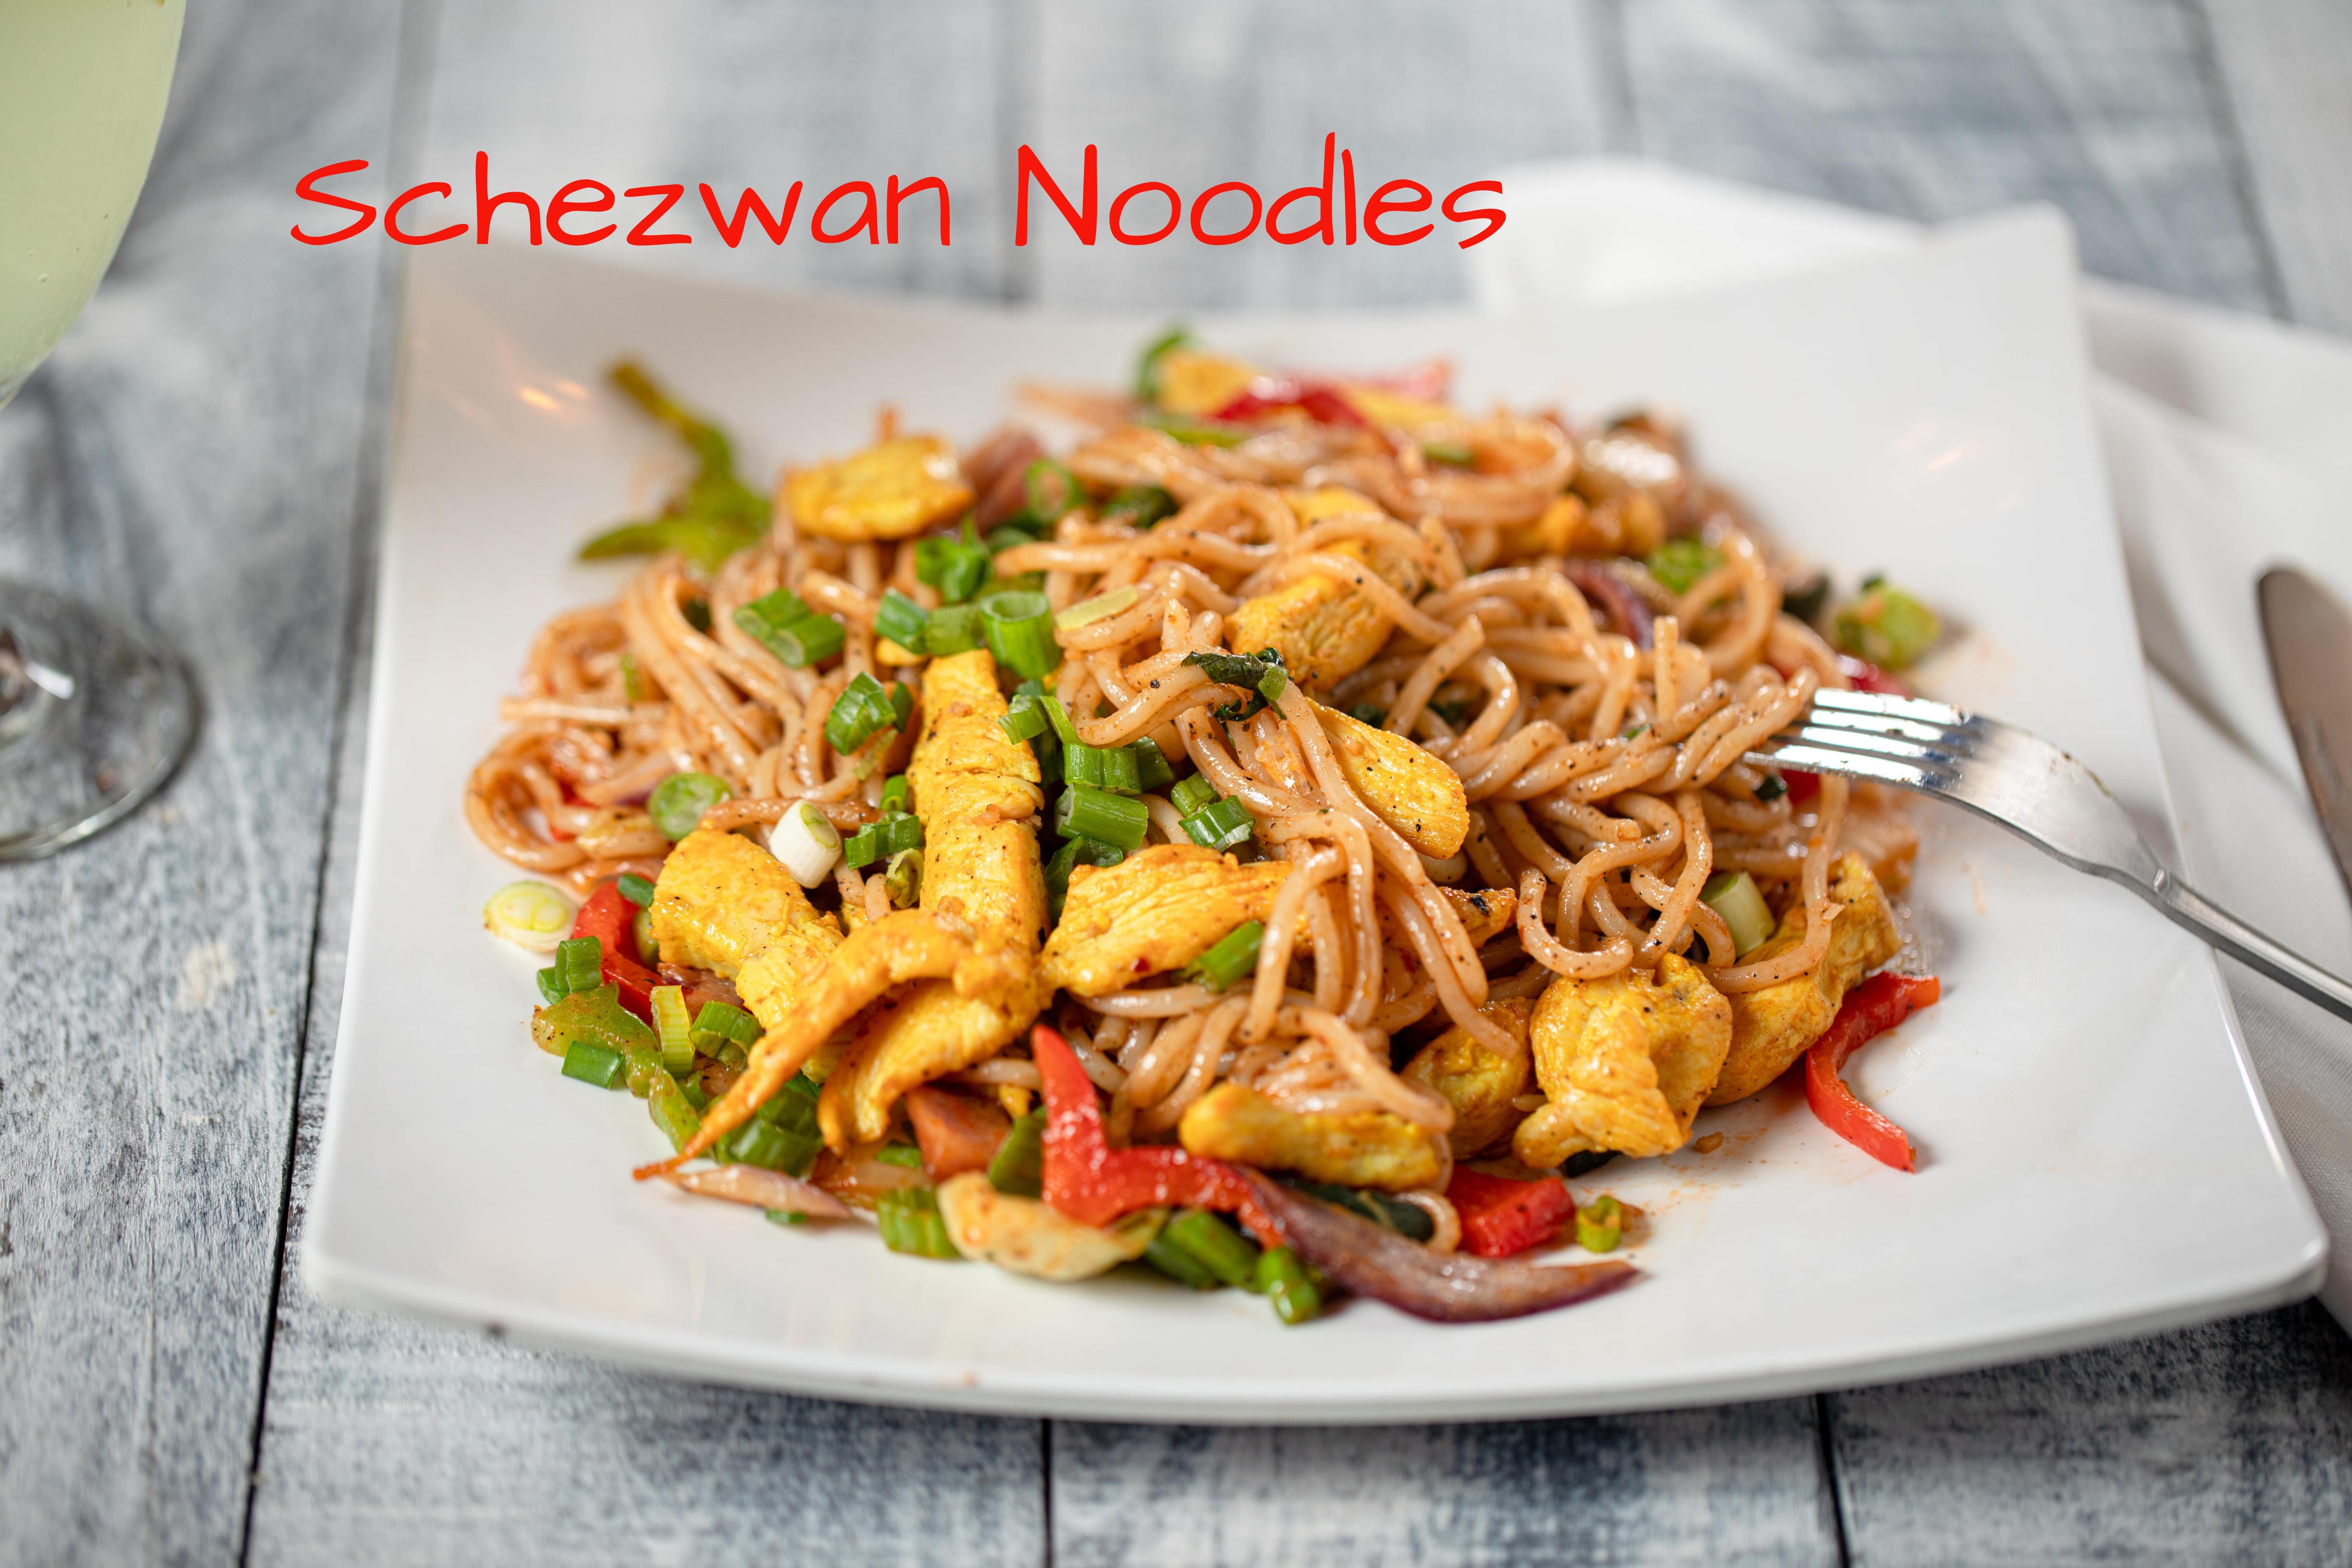 Mix Schezwan Noodles